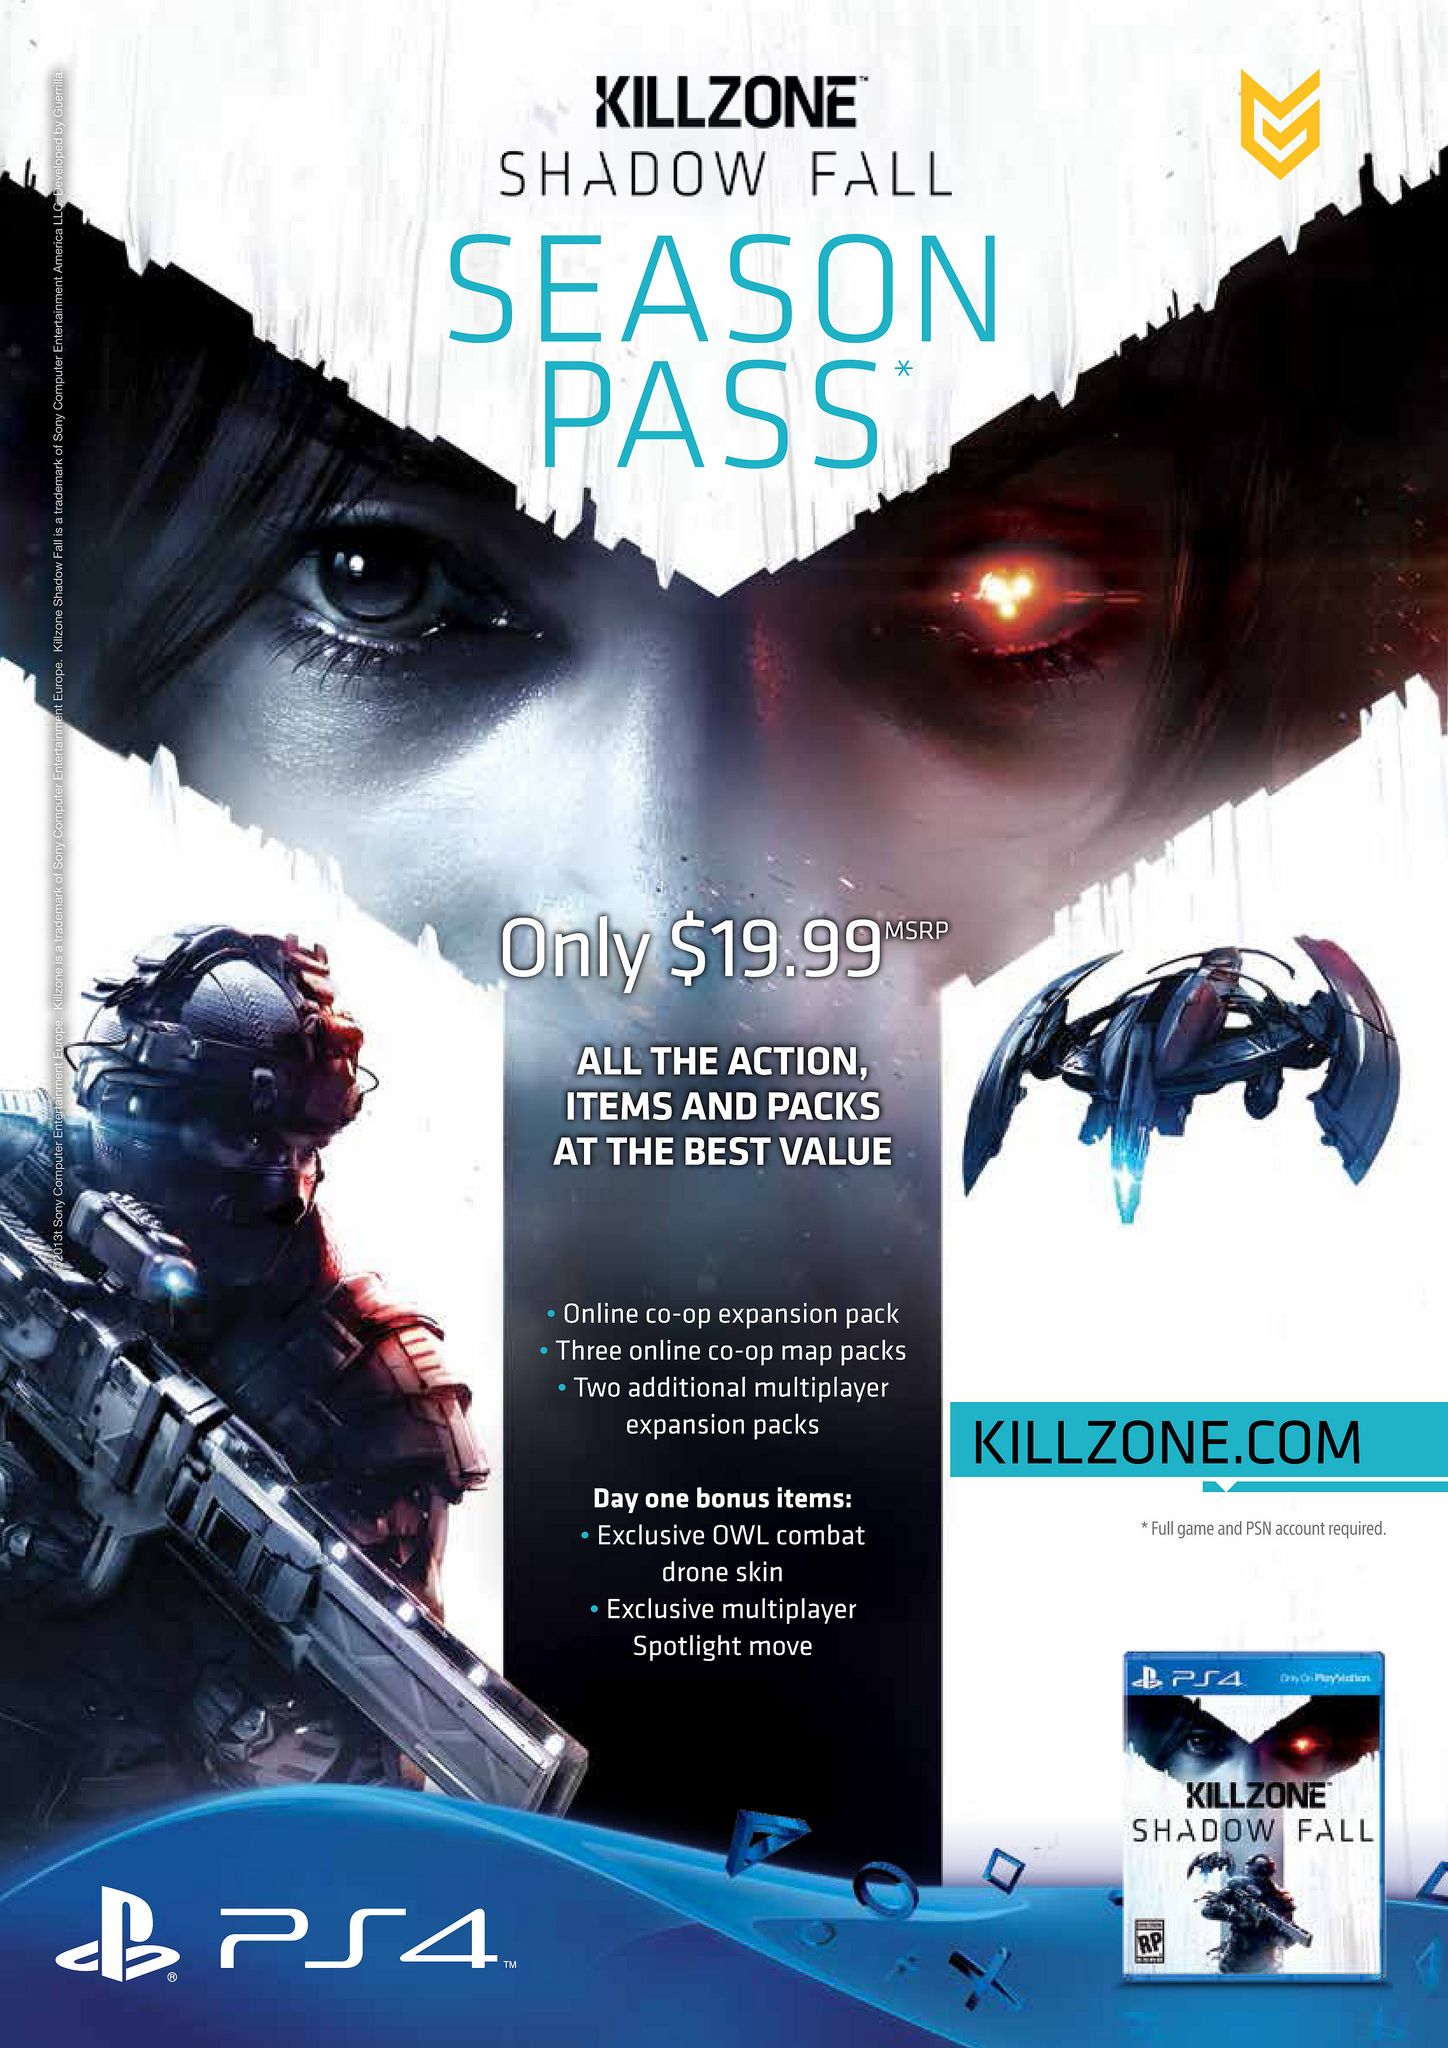 PS4 Game ~ Killzone: Shadow Fall Sony PlayStation 4